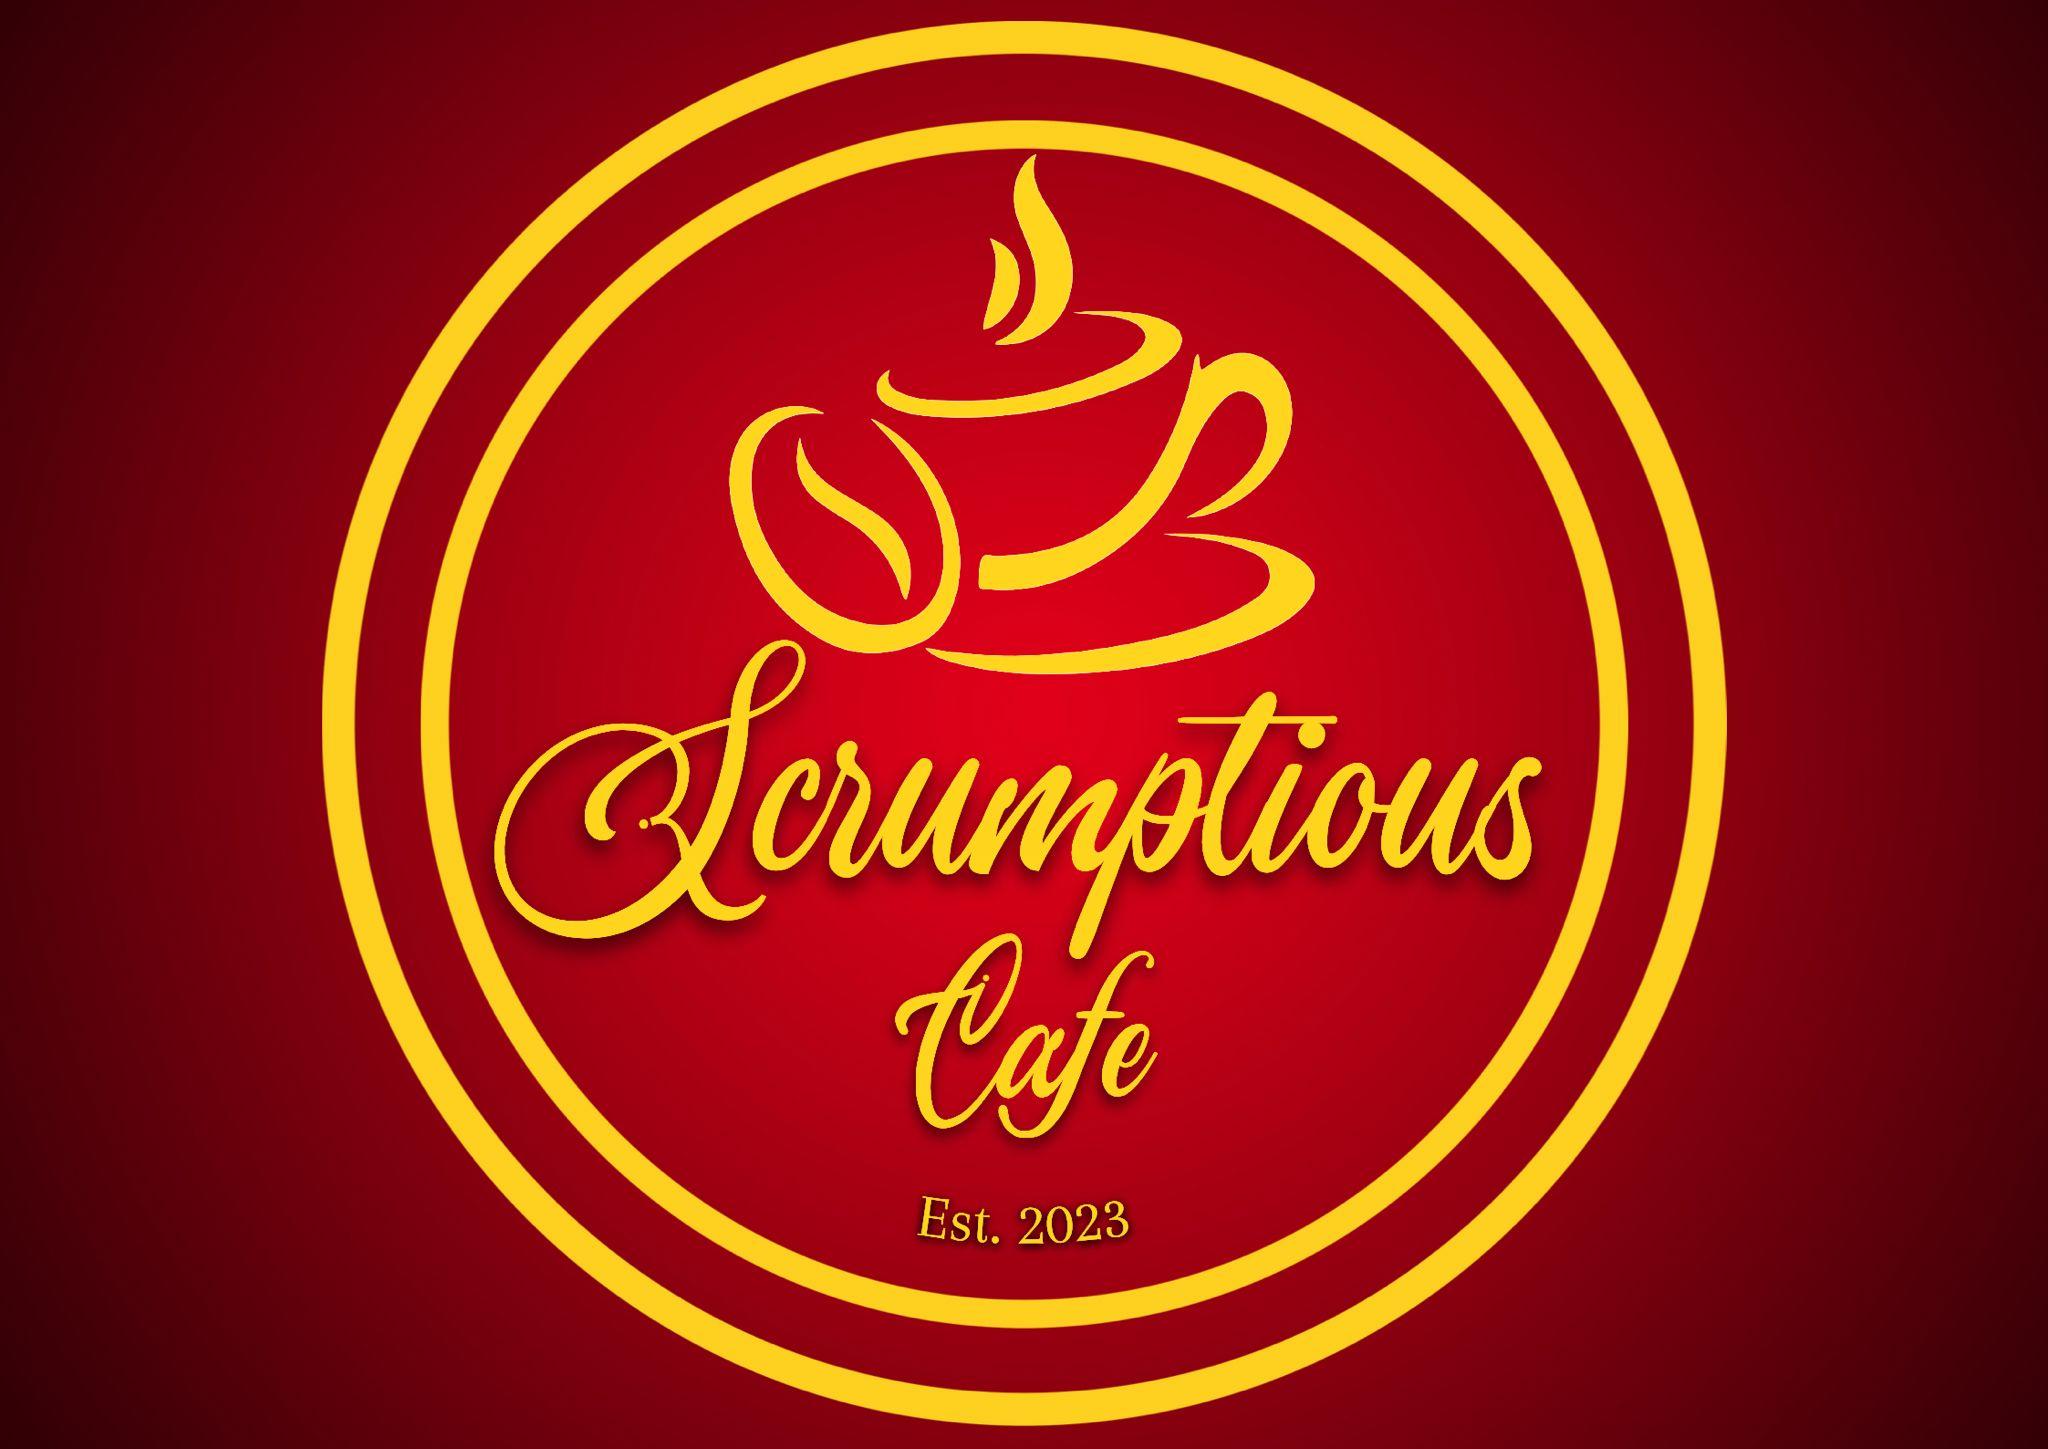 Scrumptious Cafe